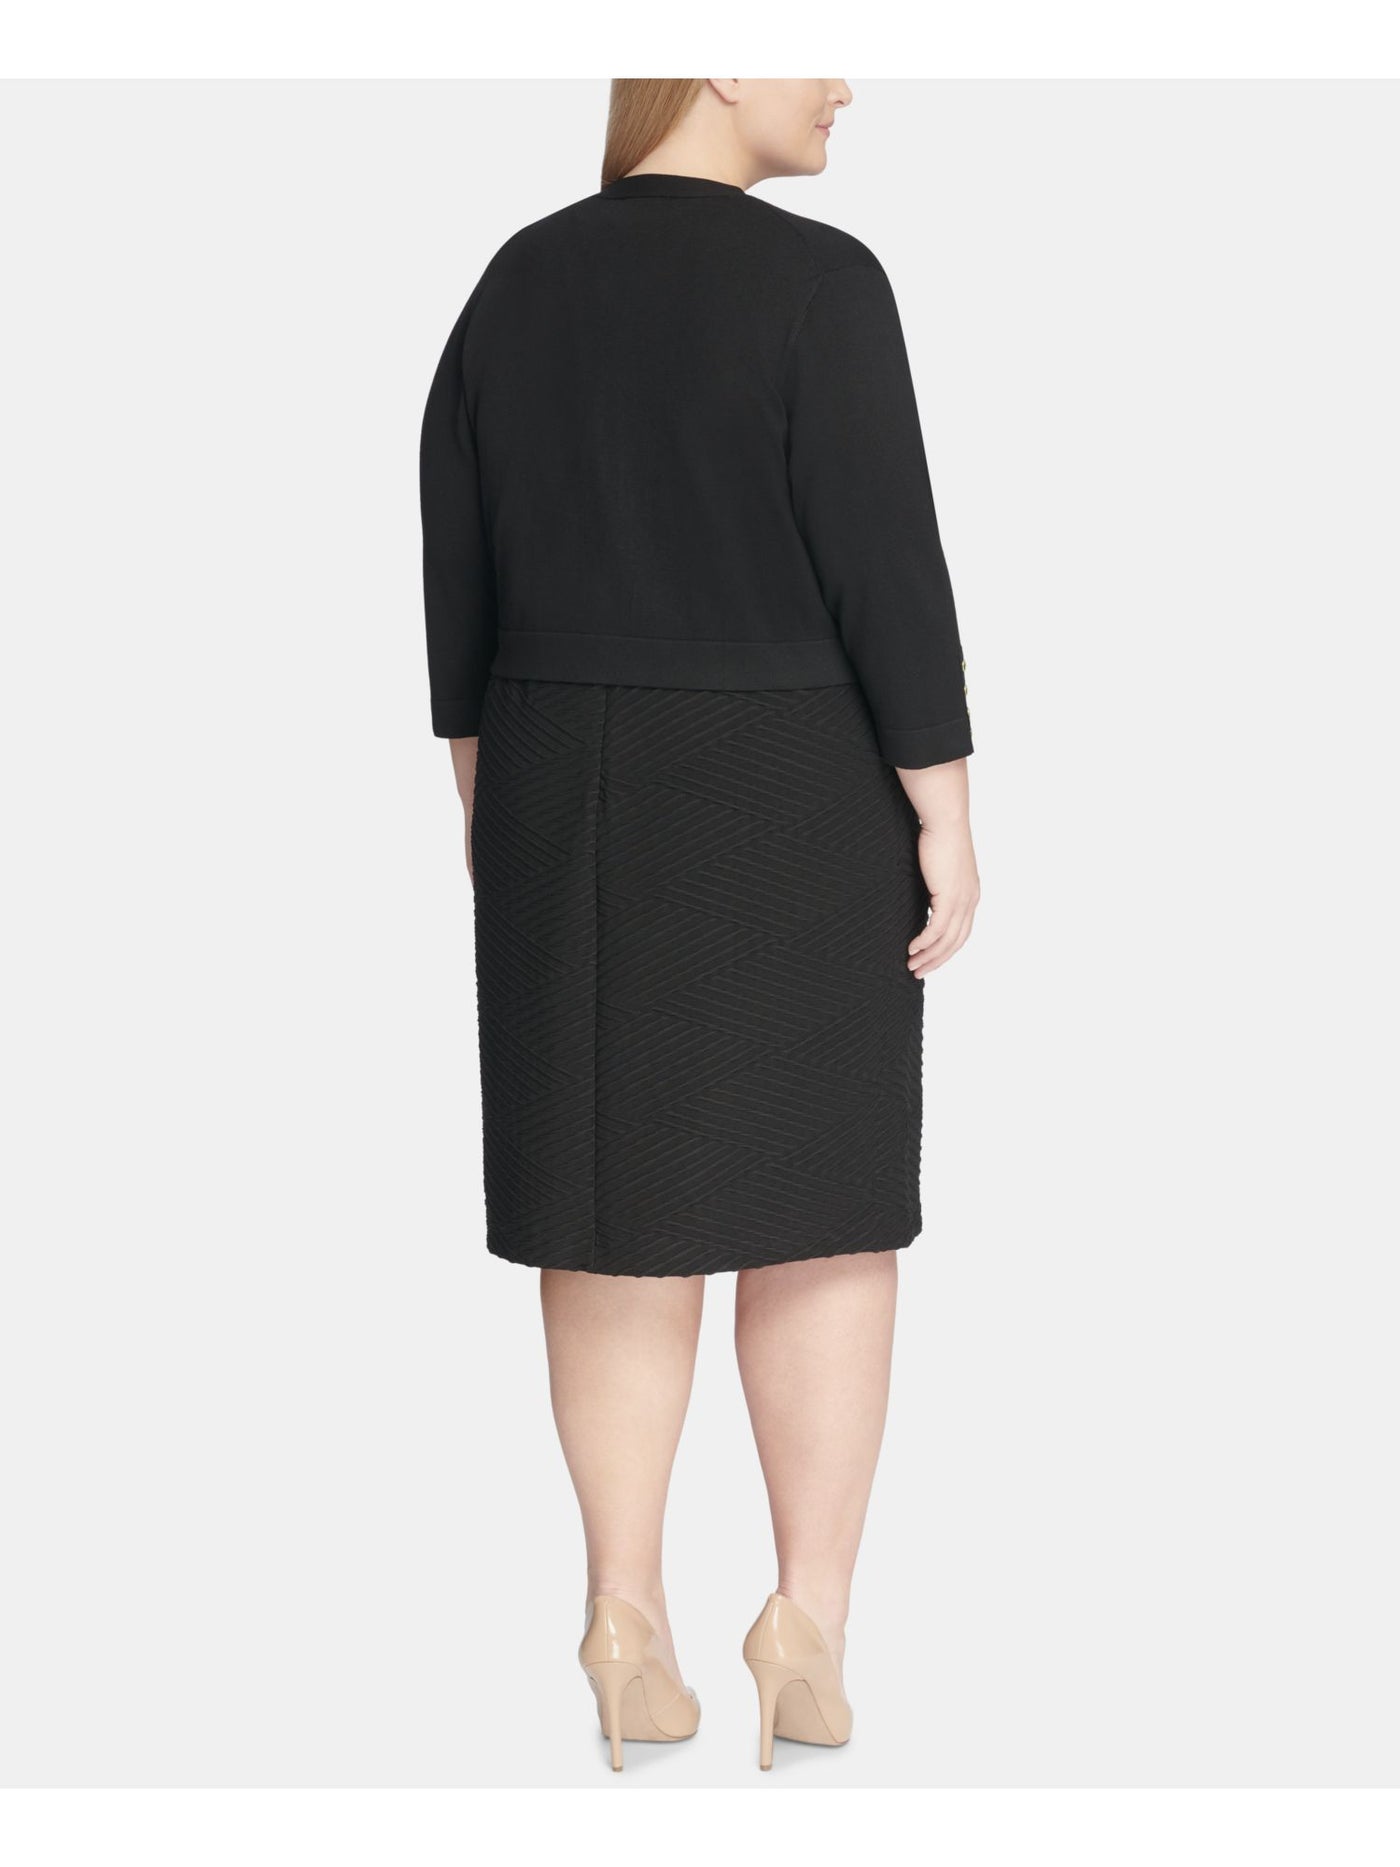 TOMMY HILFIGER Womens Black Long Sleeve Open Cardigan Wear To Work Sweater Plus 1X